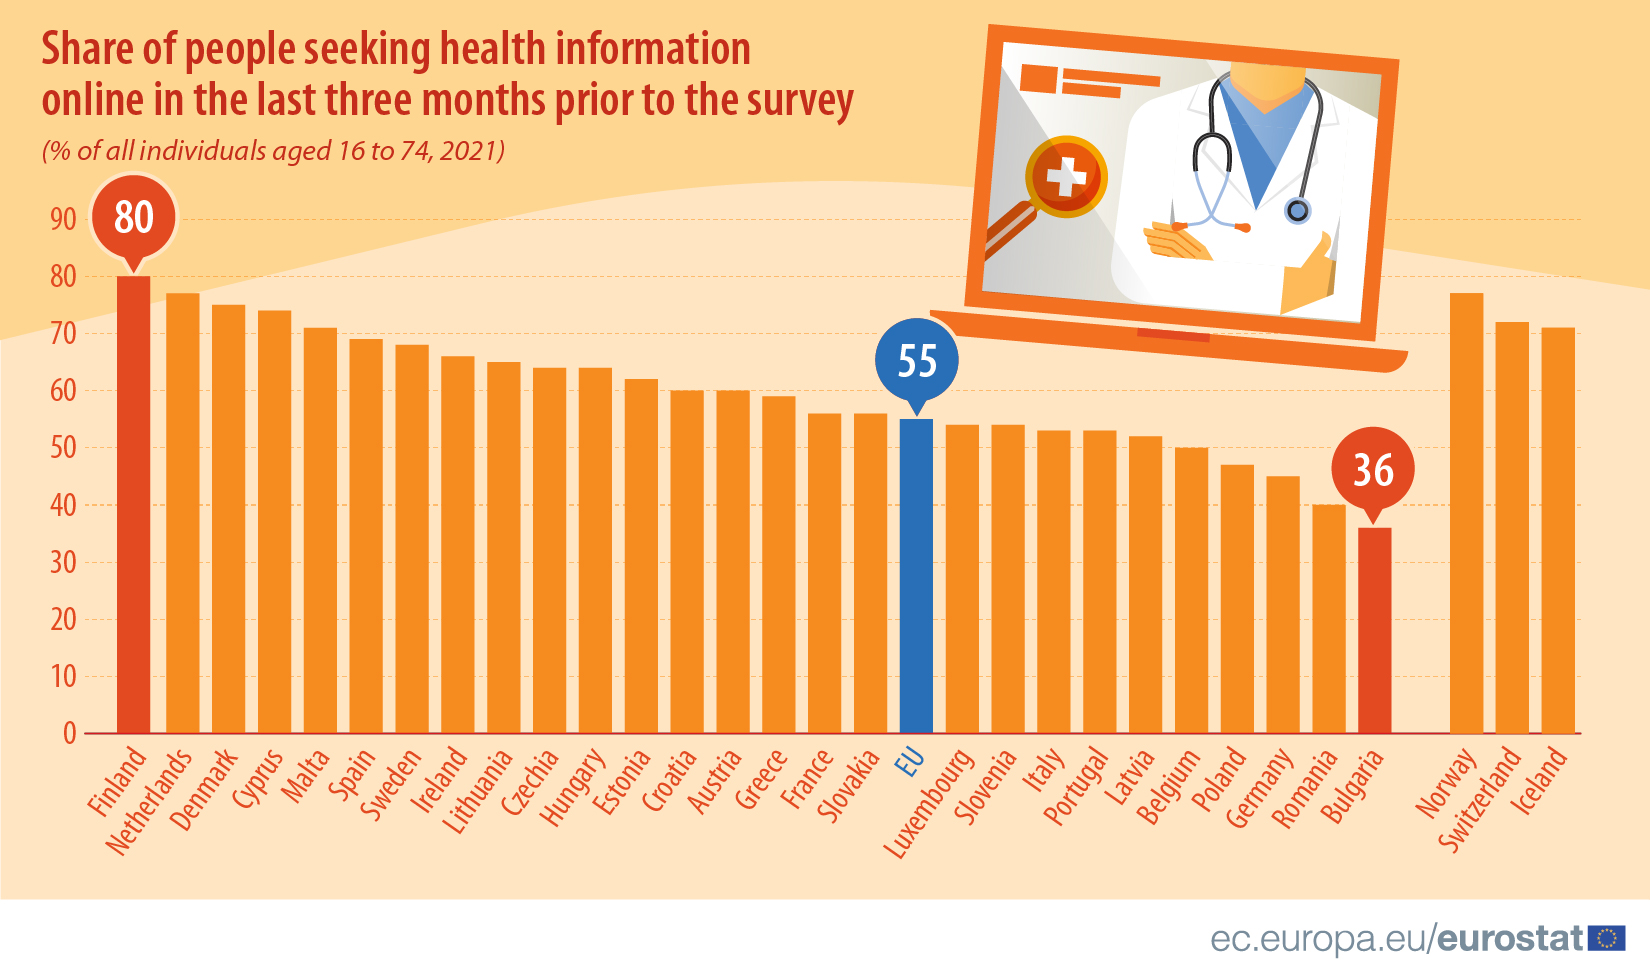 Bar graph: Ποσοστό ατόμων που αναζητούν πληροφορίες για την υγεία στο διαδίκτυο τους τελευταίους τρεις μήνες πριν από την έρευνα, ποσοστό όλων των ατόμων ηλικίας 16 έως 74 ετών το 2021, στις χώρες της ΕΕ και της ΕΖΕΣ